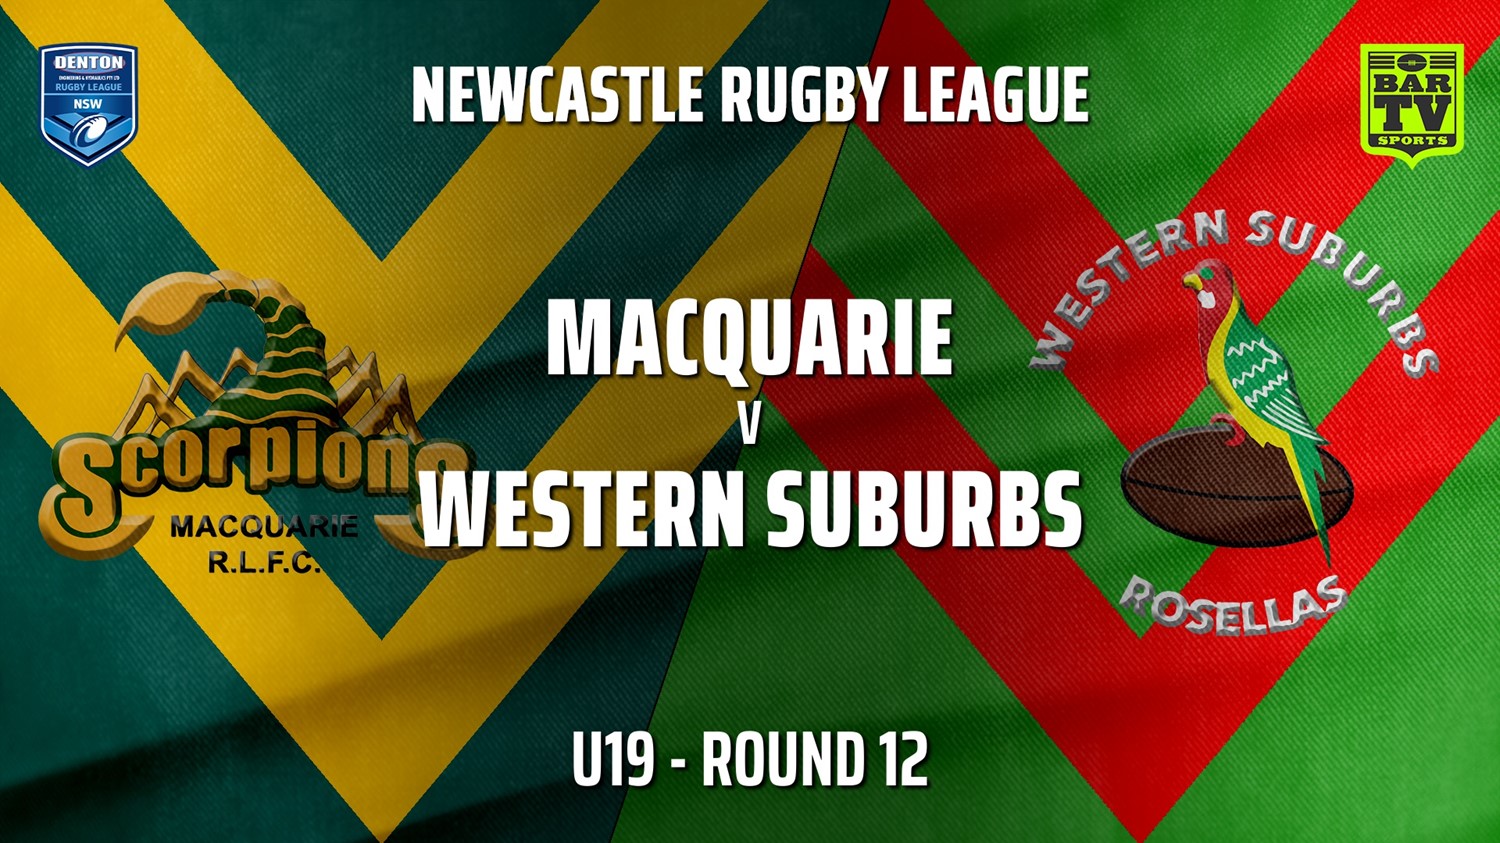 210620-Newcastle Round 12 - U19 - Macquarie Scorpions v Western Suburbs Rosellas Slate Image